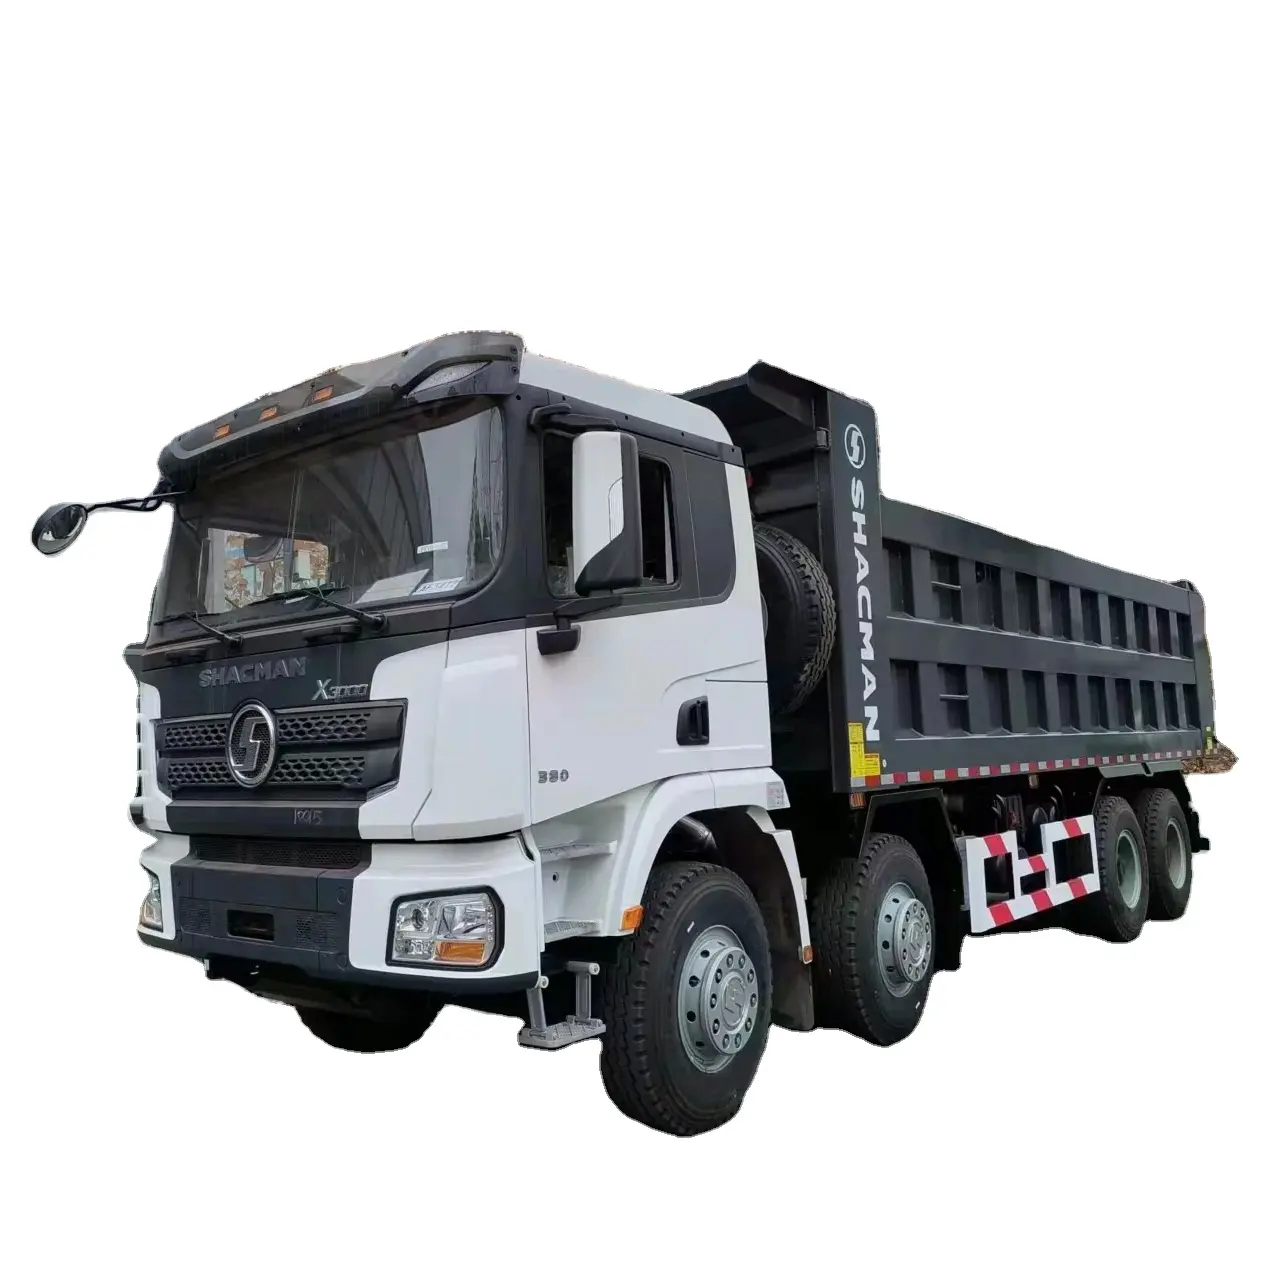 Shacman X3000 8X4 Euro6 대형 트럭 460HP 덤프 트럭 내구성 6x4 구동 휠 디젤 연료 새로운 사용 조건 유로 6 배출